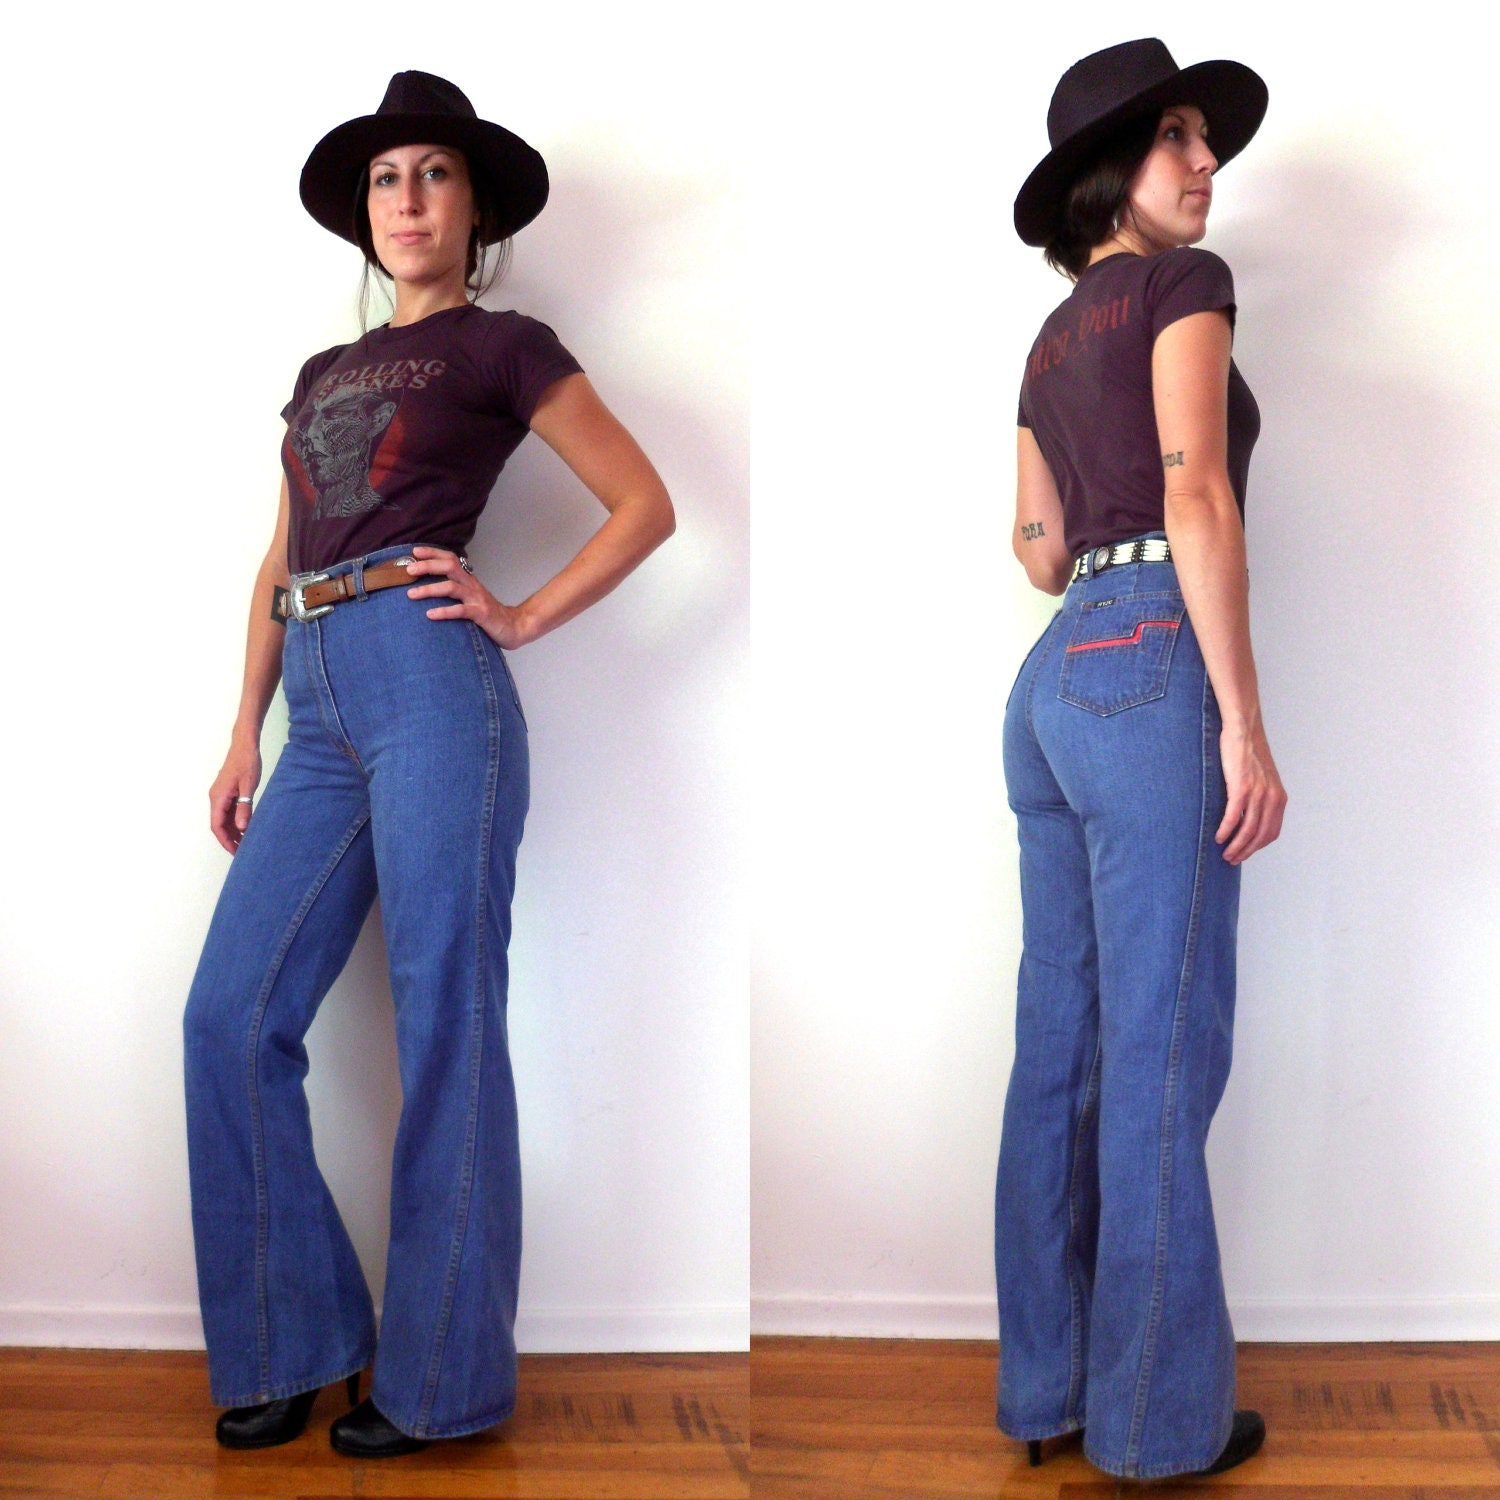 70's high waisted bell bottom jeans